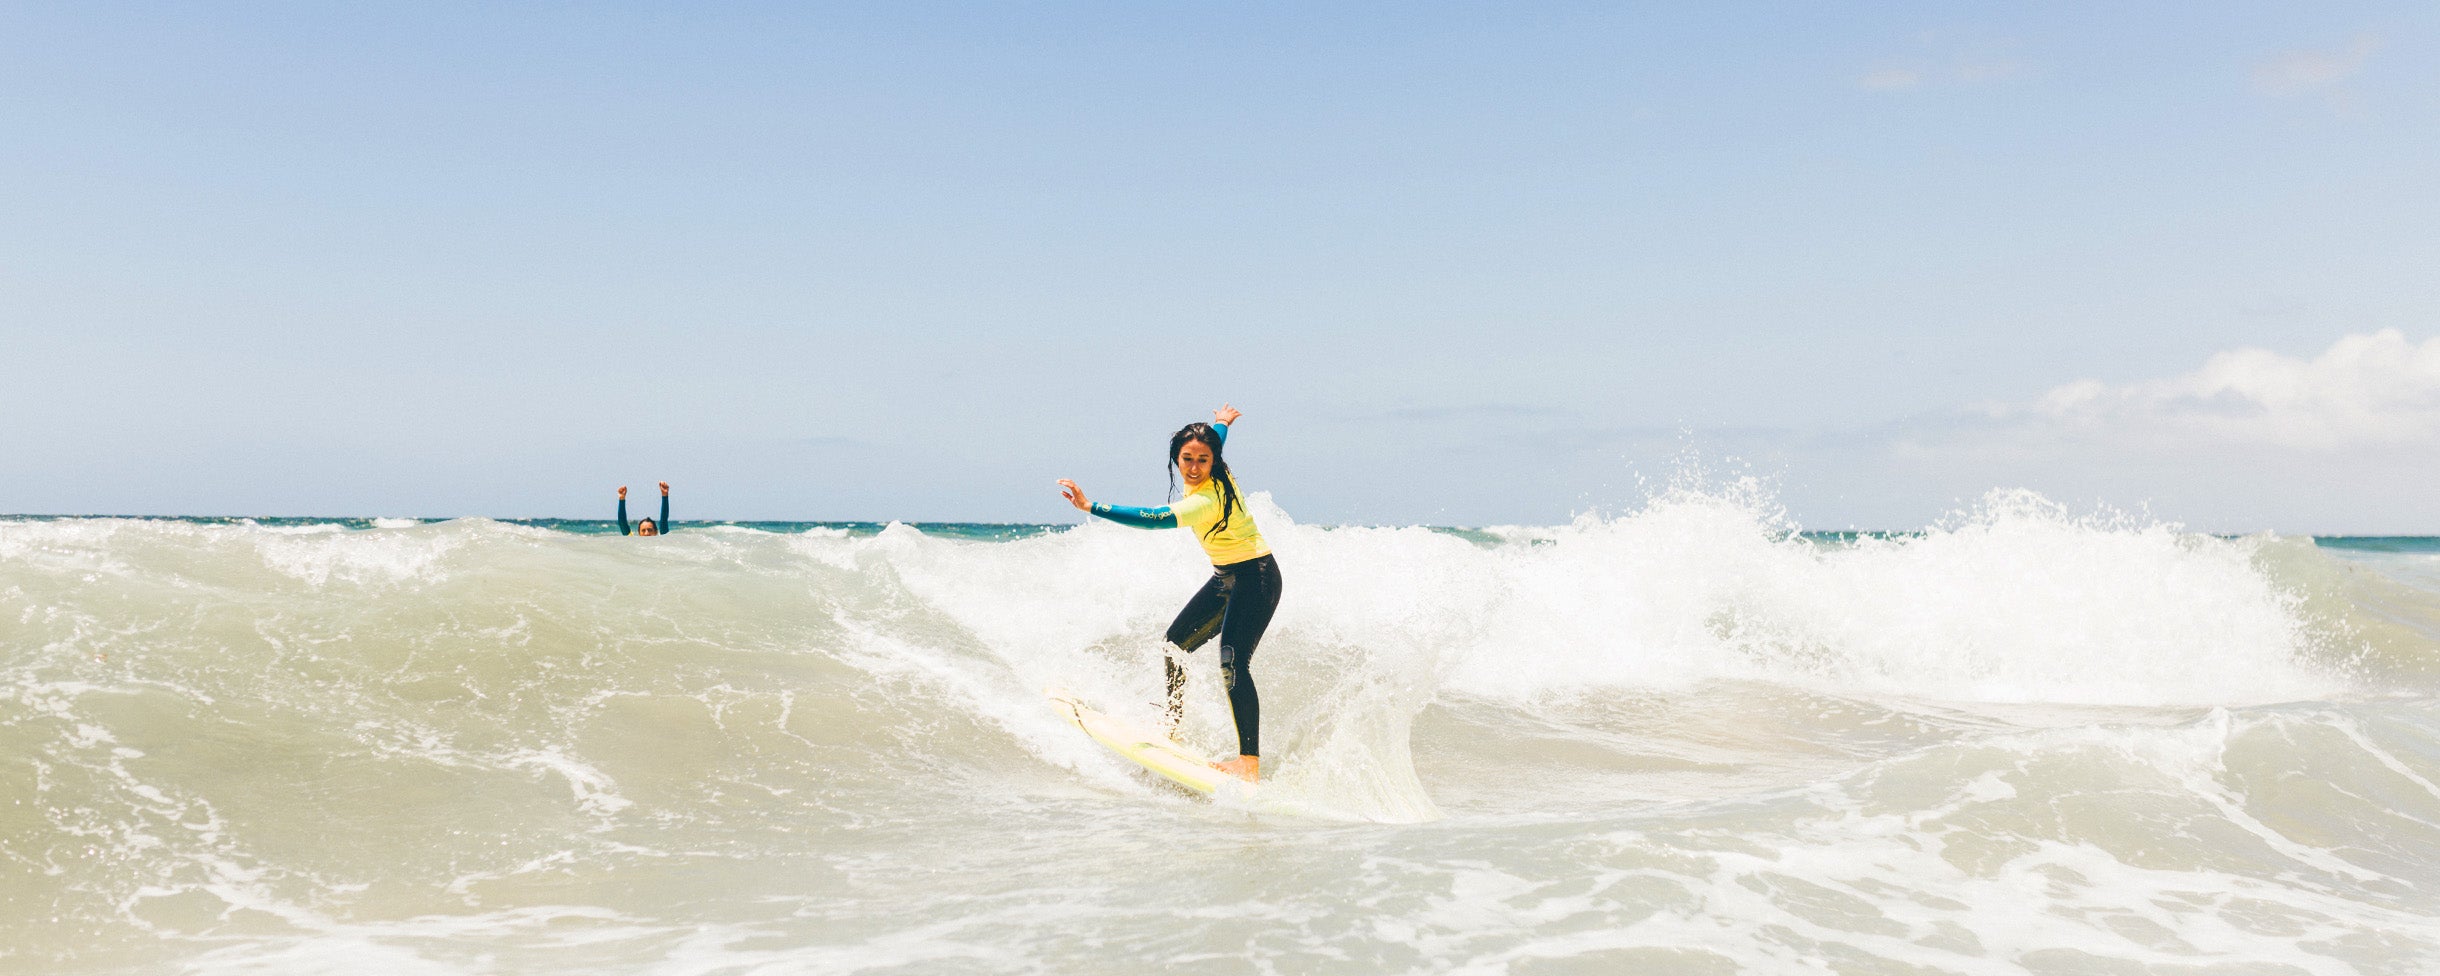 Rentals - Everyday California Surfboard Rentals. Cute surfer girl paddling on a long board in San DIego, California